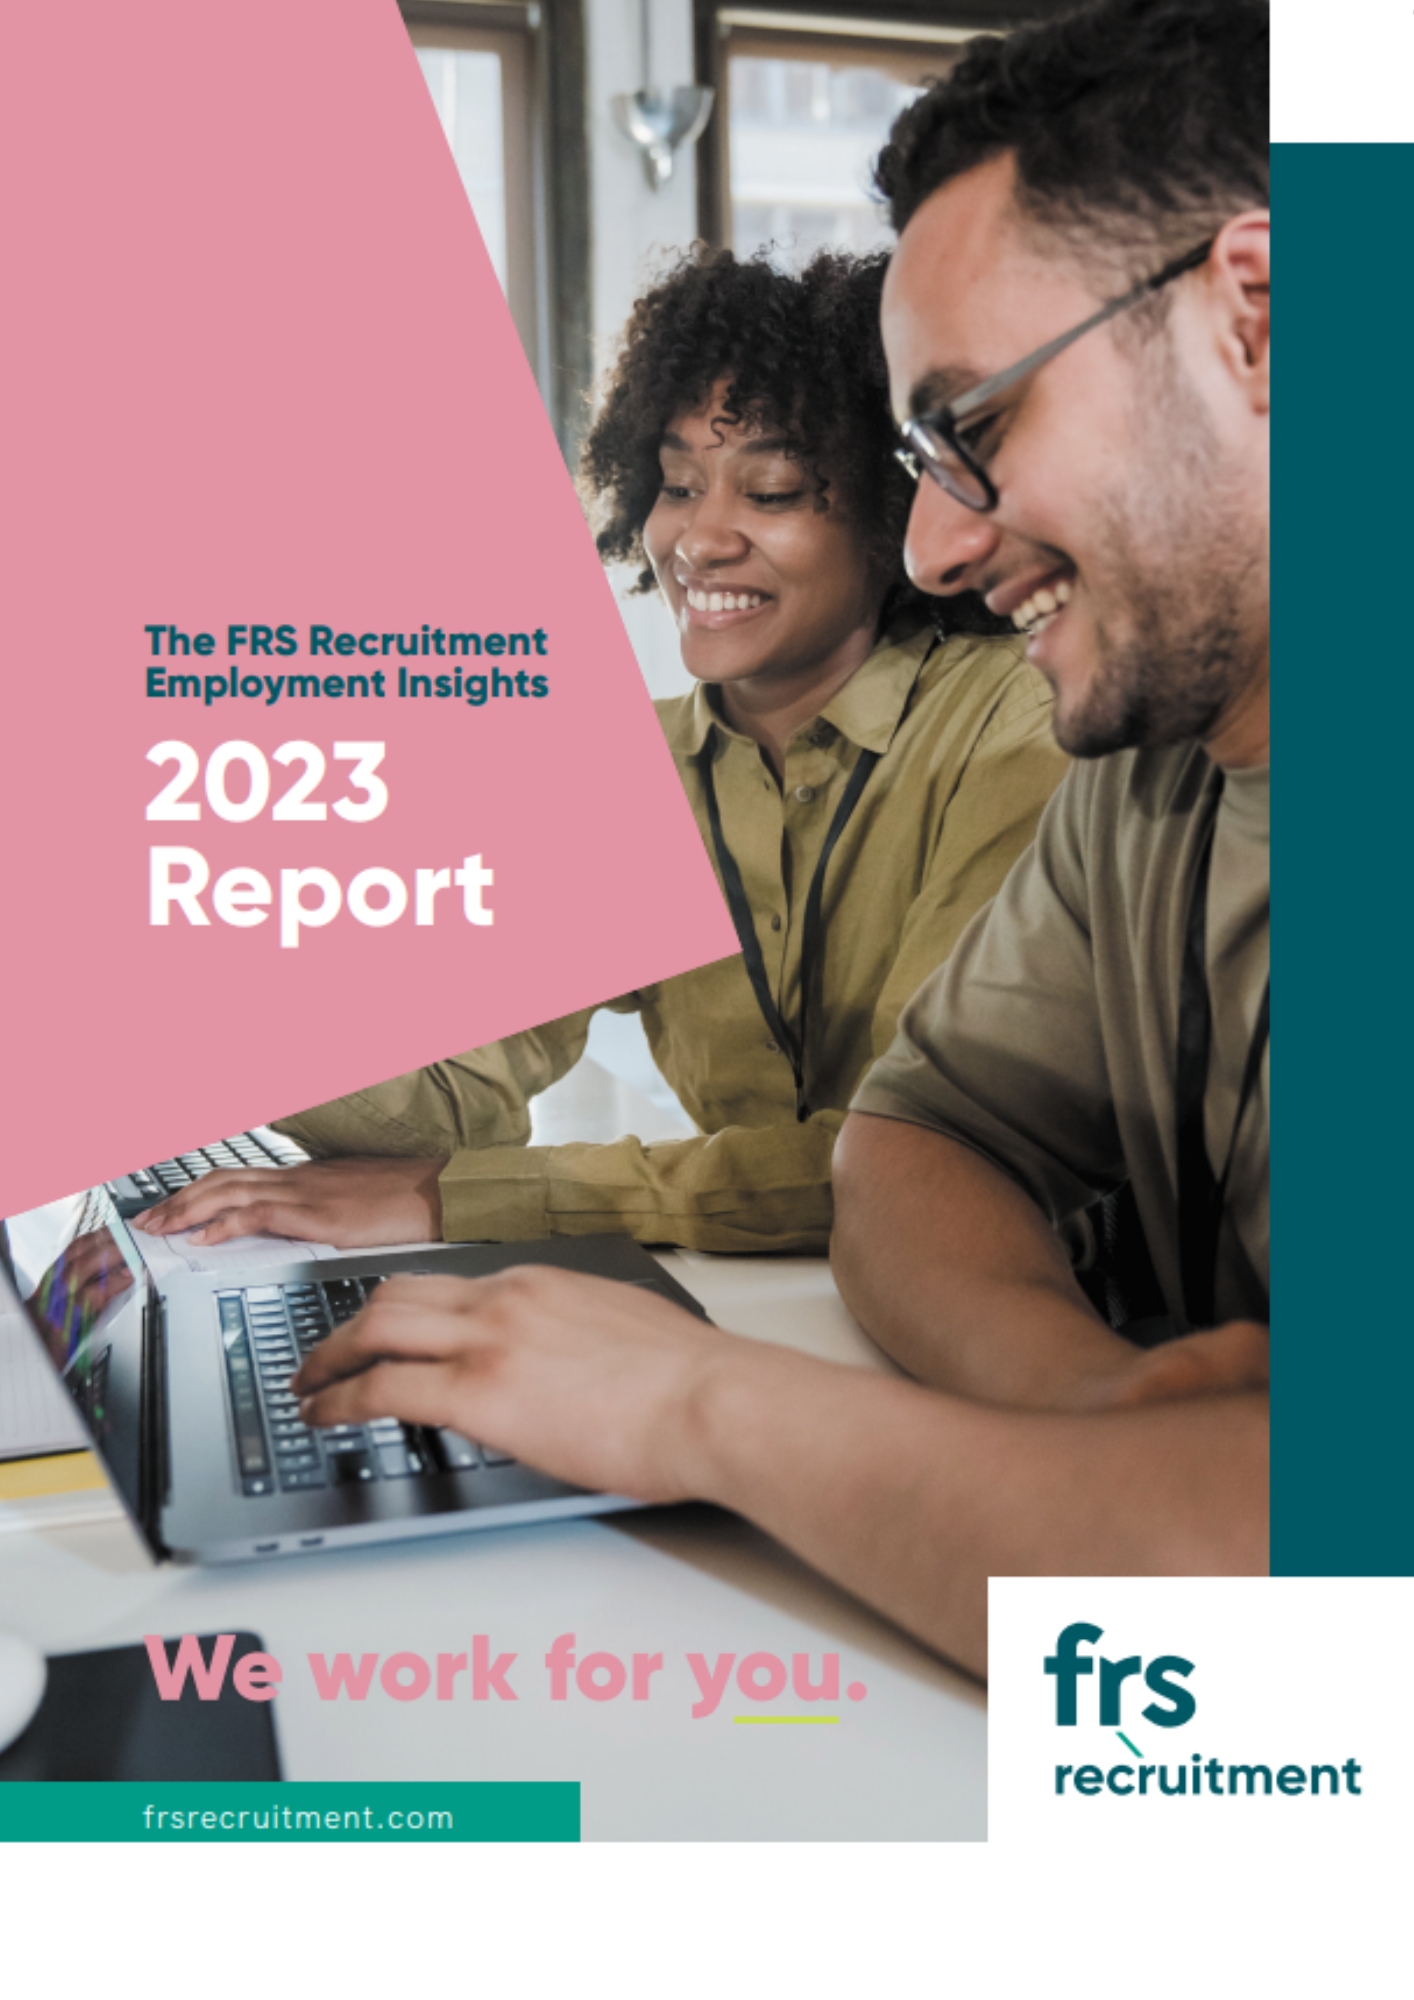 FRS Recruitment Employment Insights Report 2023